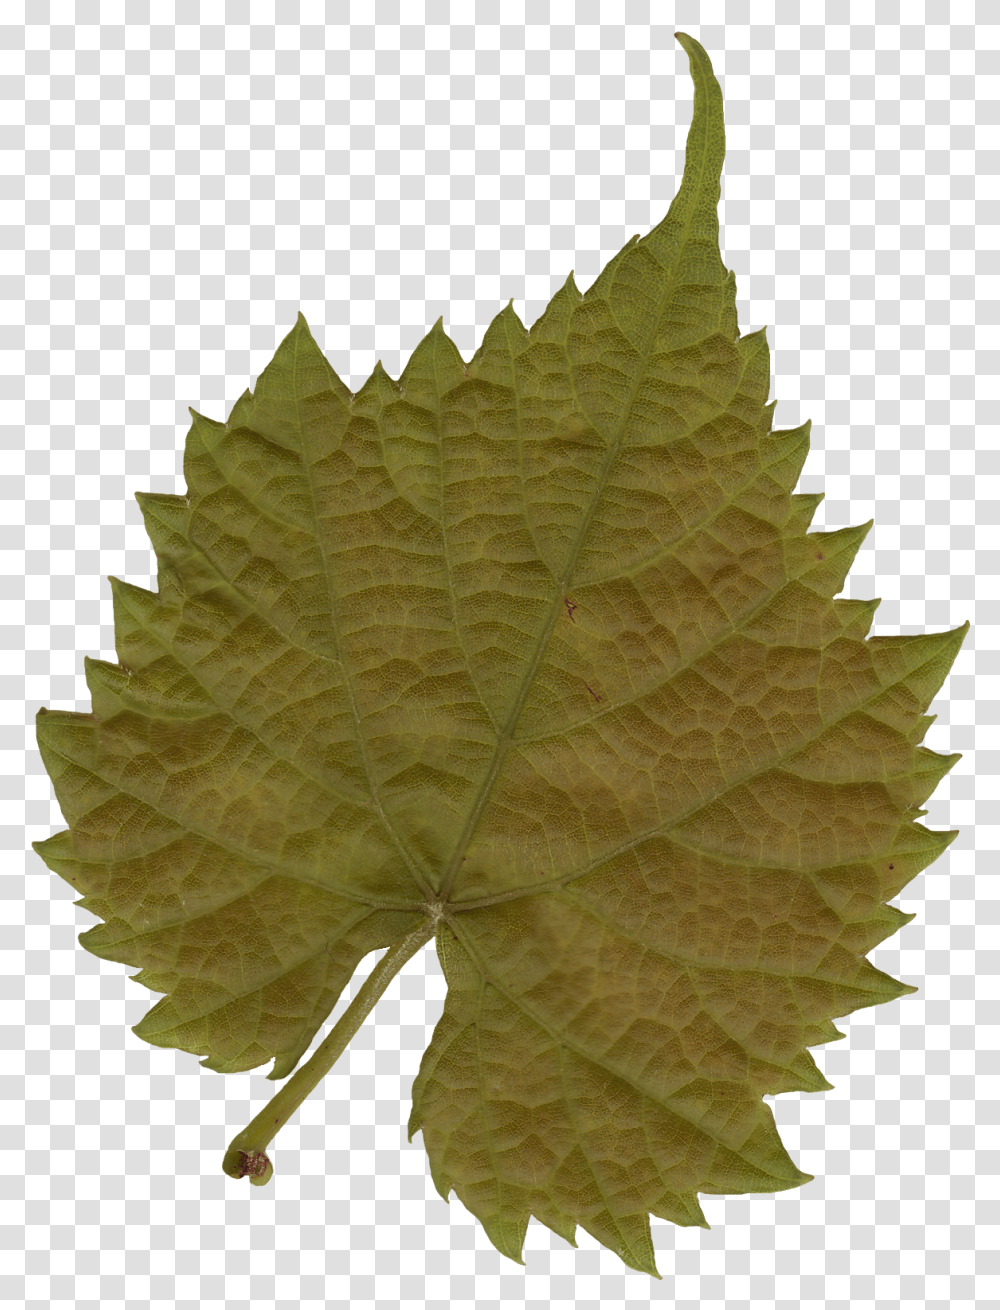 Leaf Texture Free Leaf Texture, Plant, Veins, Maple Leaf, Tree Transparent Png